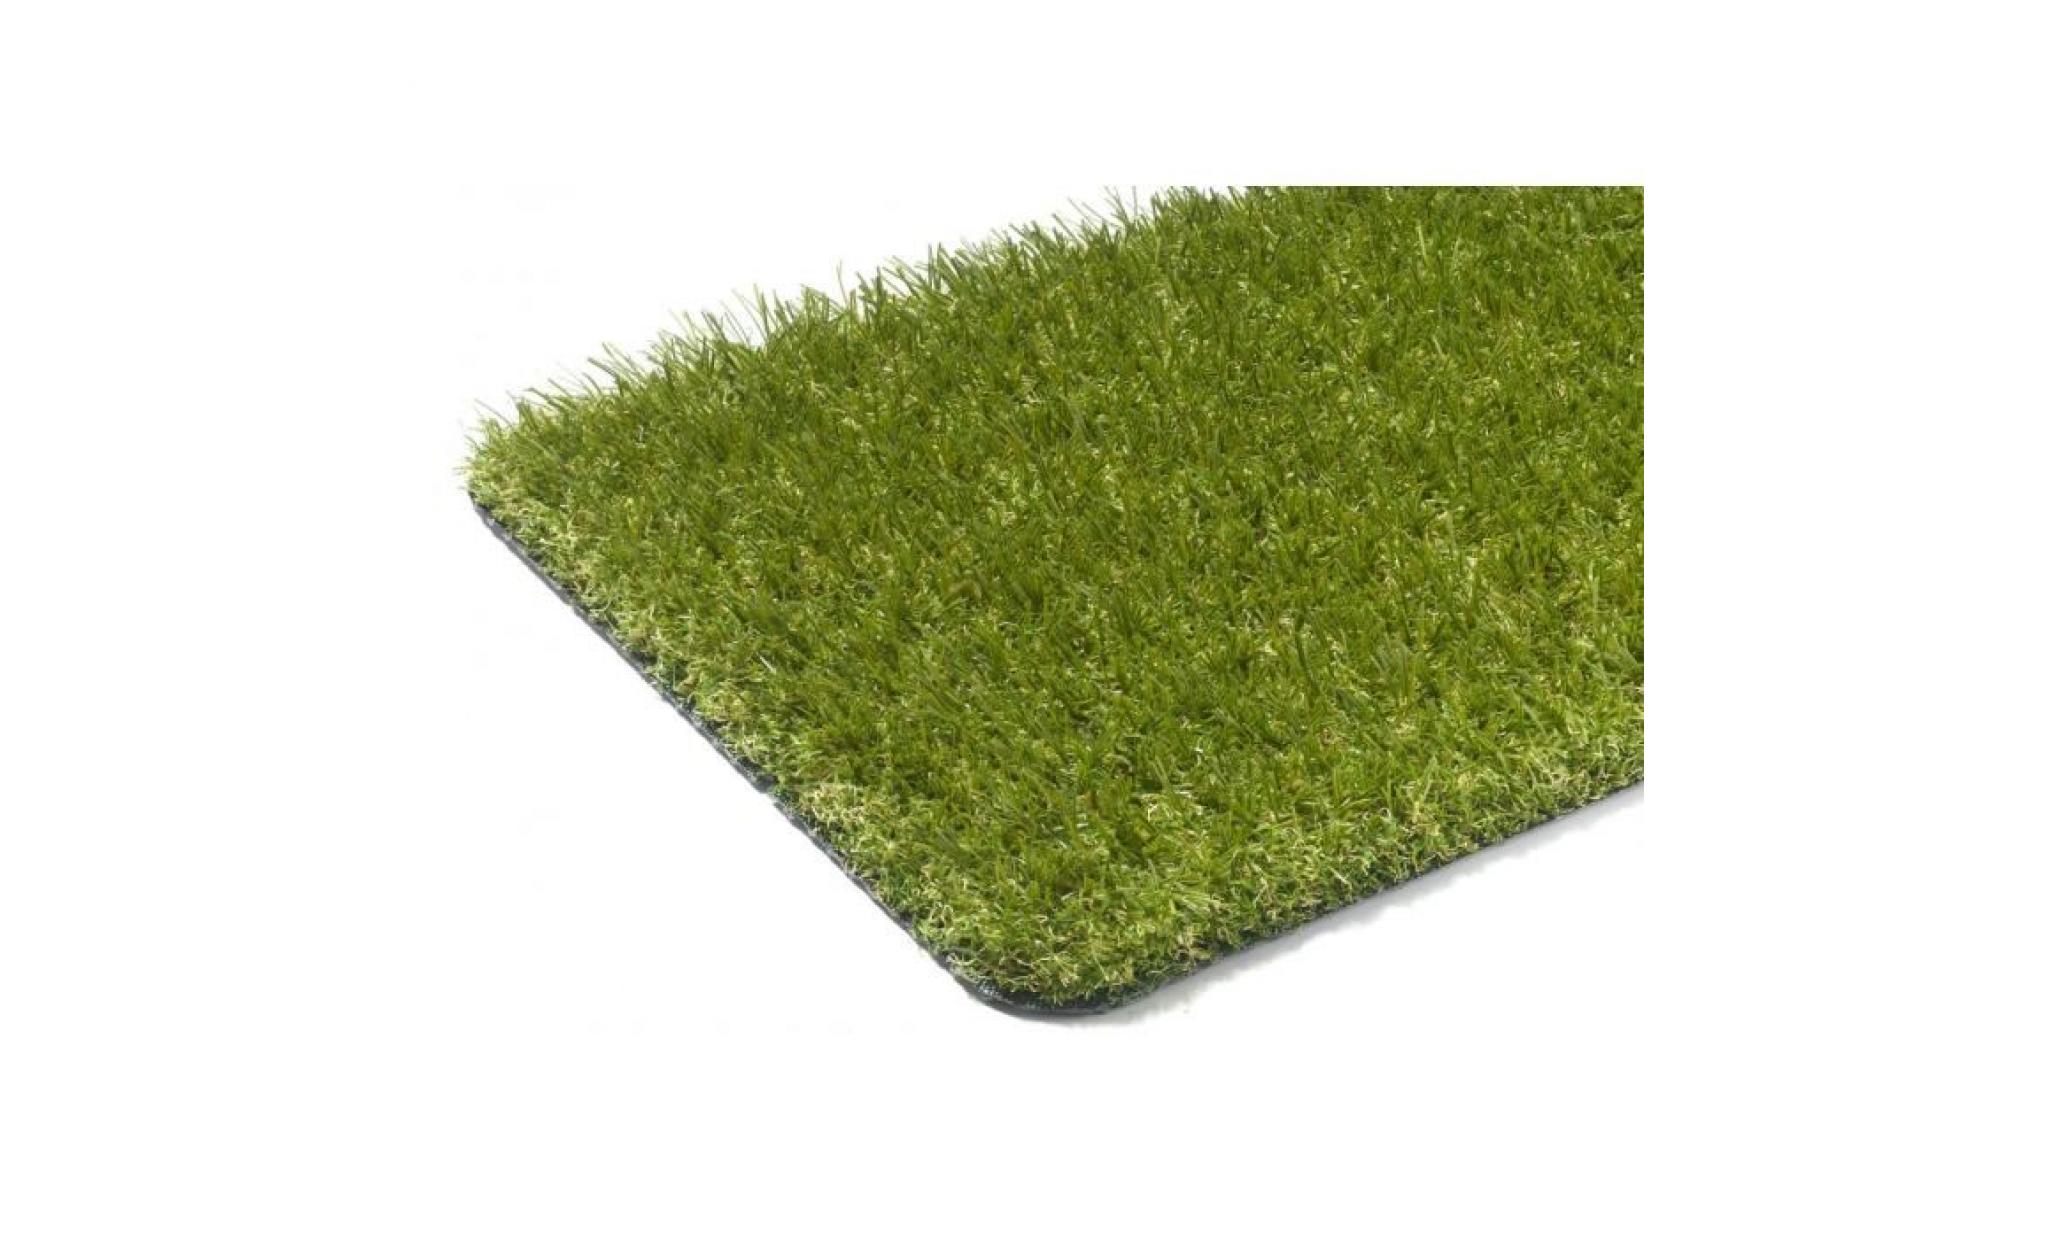 wembley   tapis type luxe gazon artificiel – pour jardin, terrasse, balcon   vert  [400x150 cm]